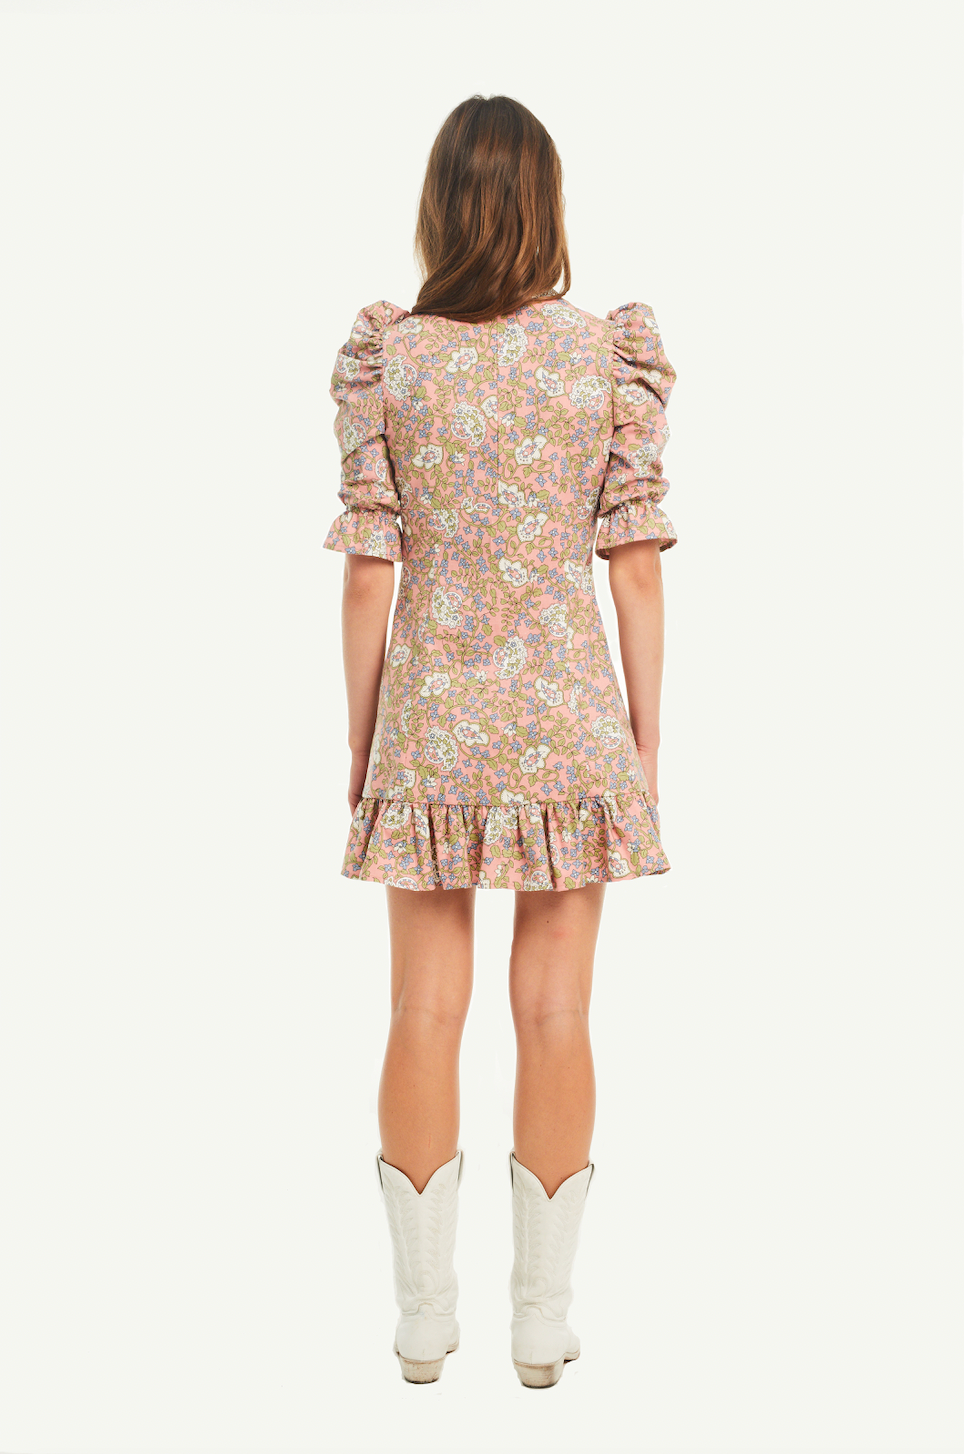 DALIA - Short cotton dress with Mirabell pattern